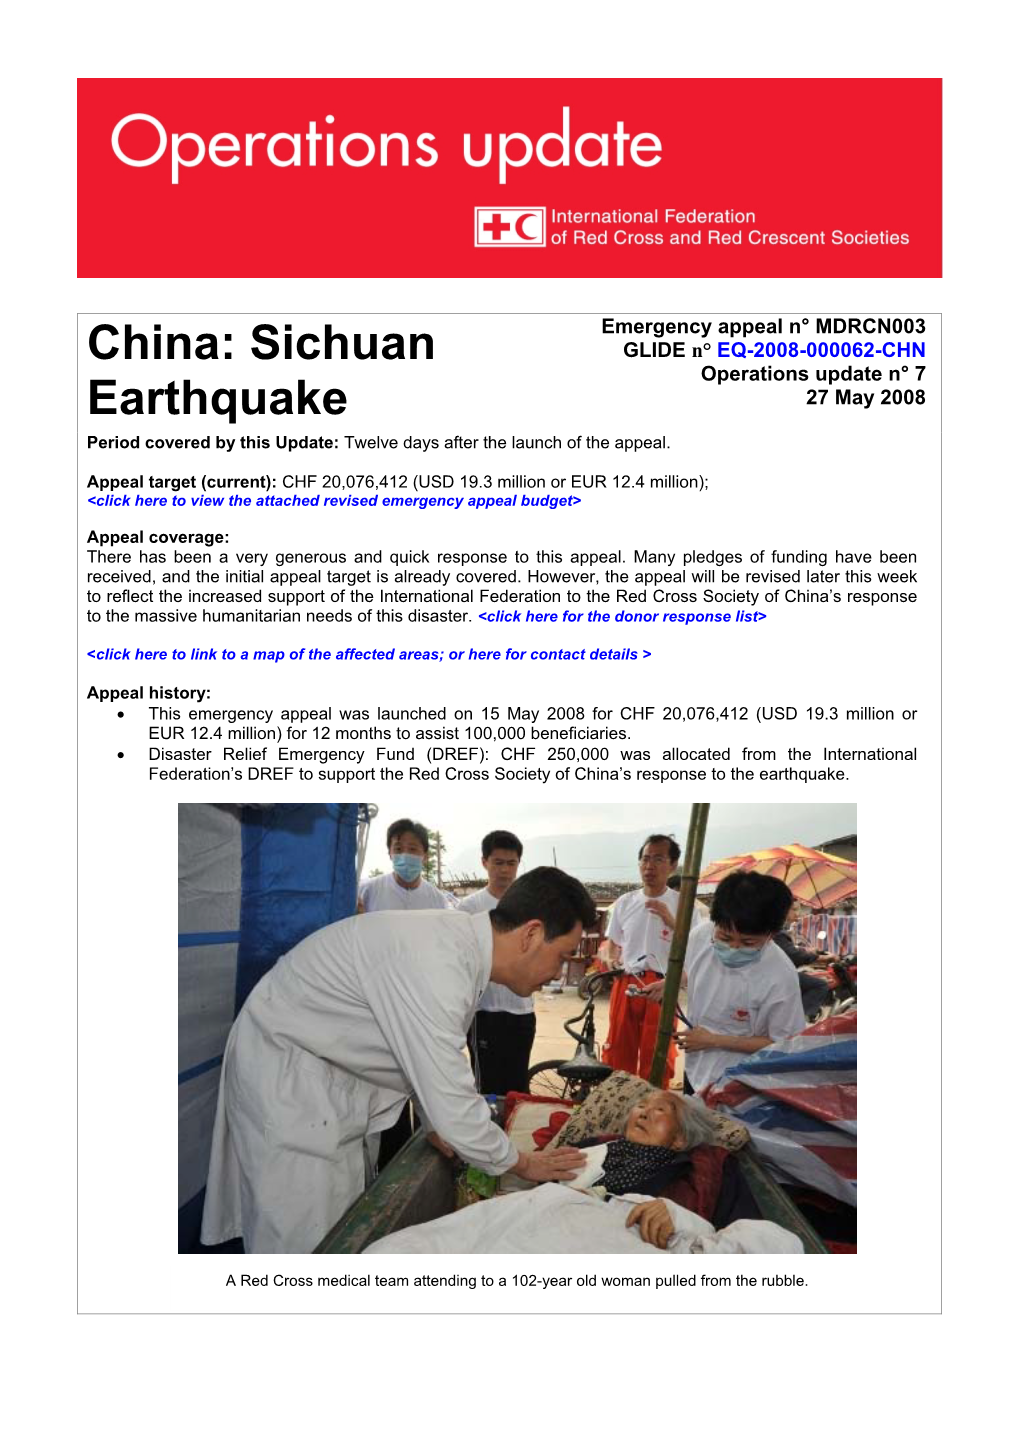 Sichuan Earthquake Relief Efforts